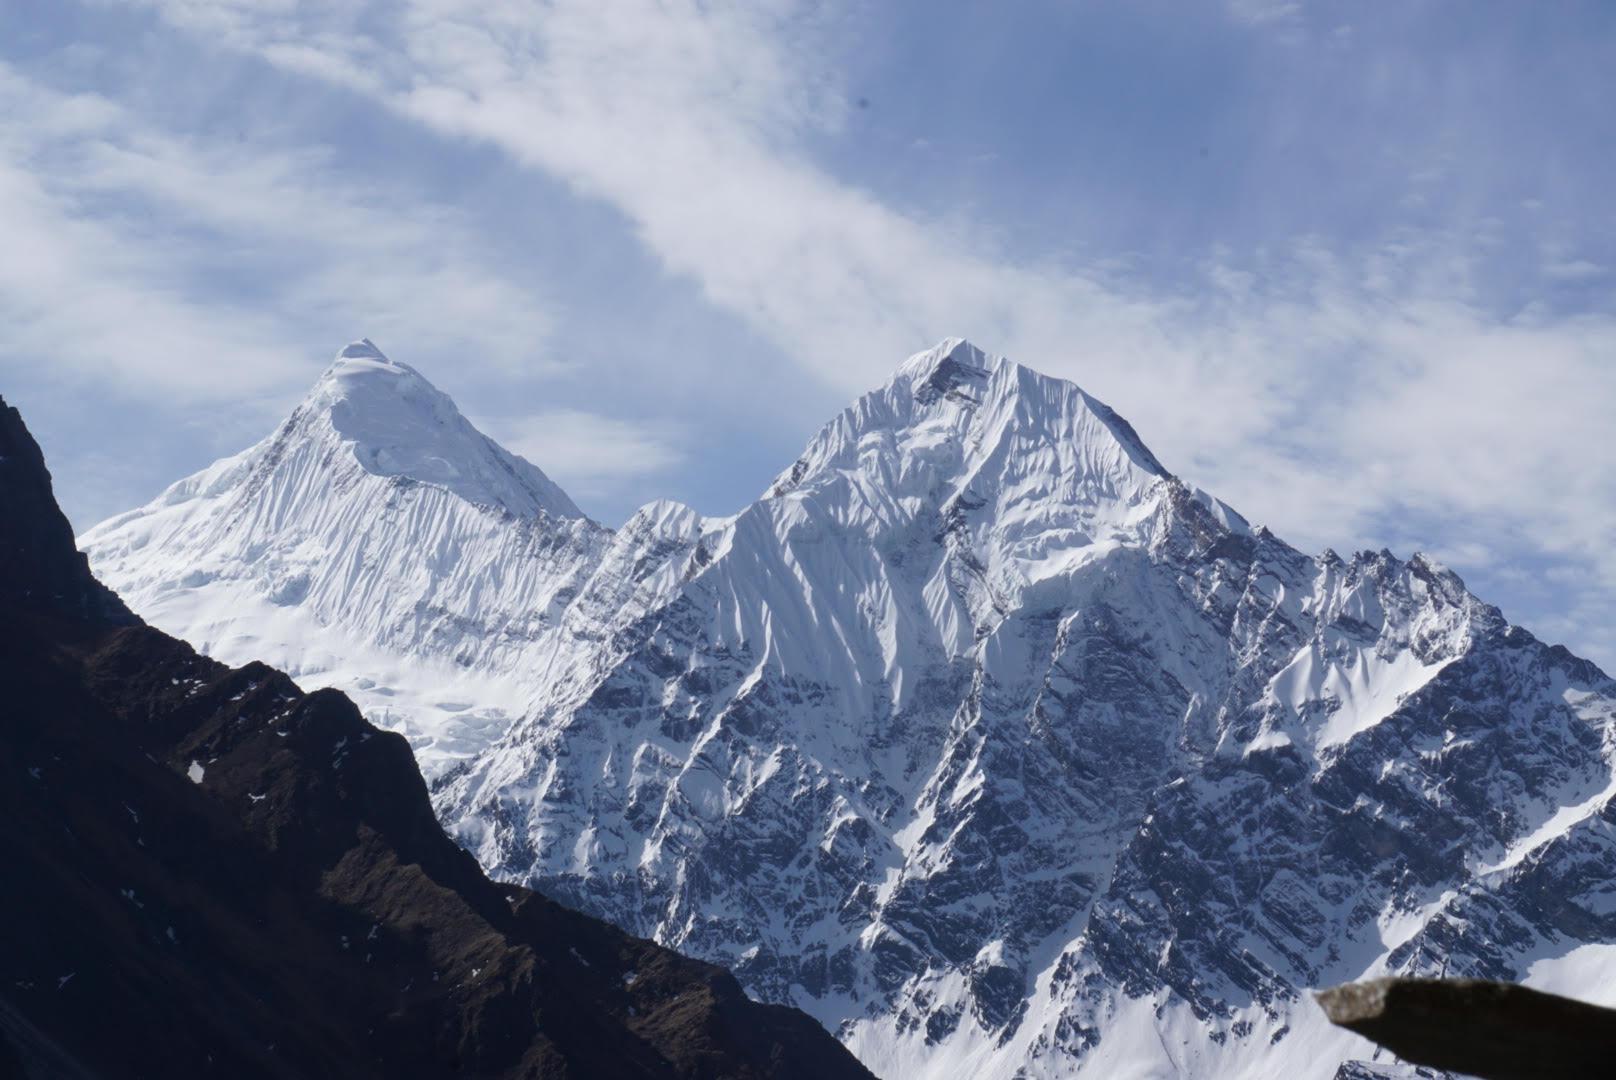 The Himalayas as seen from the Manaslu trek